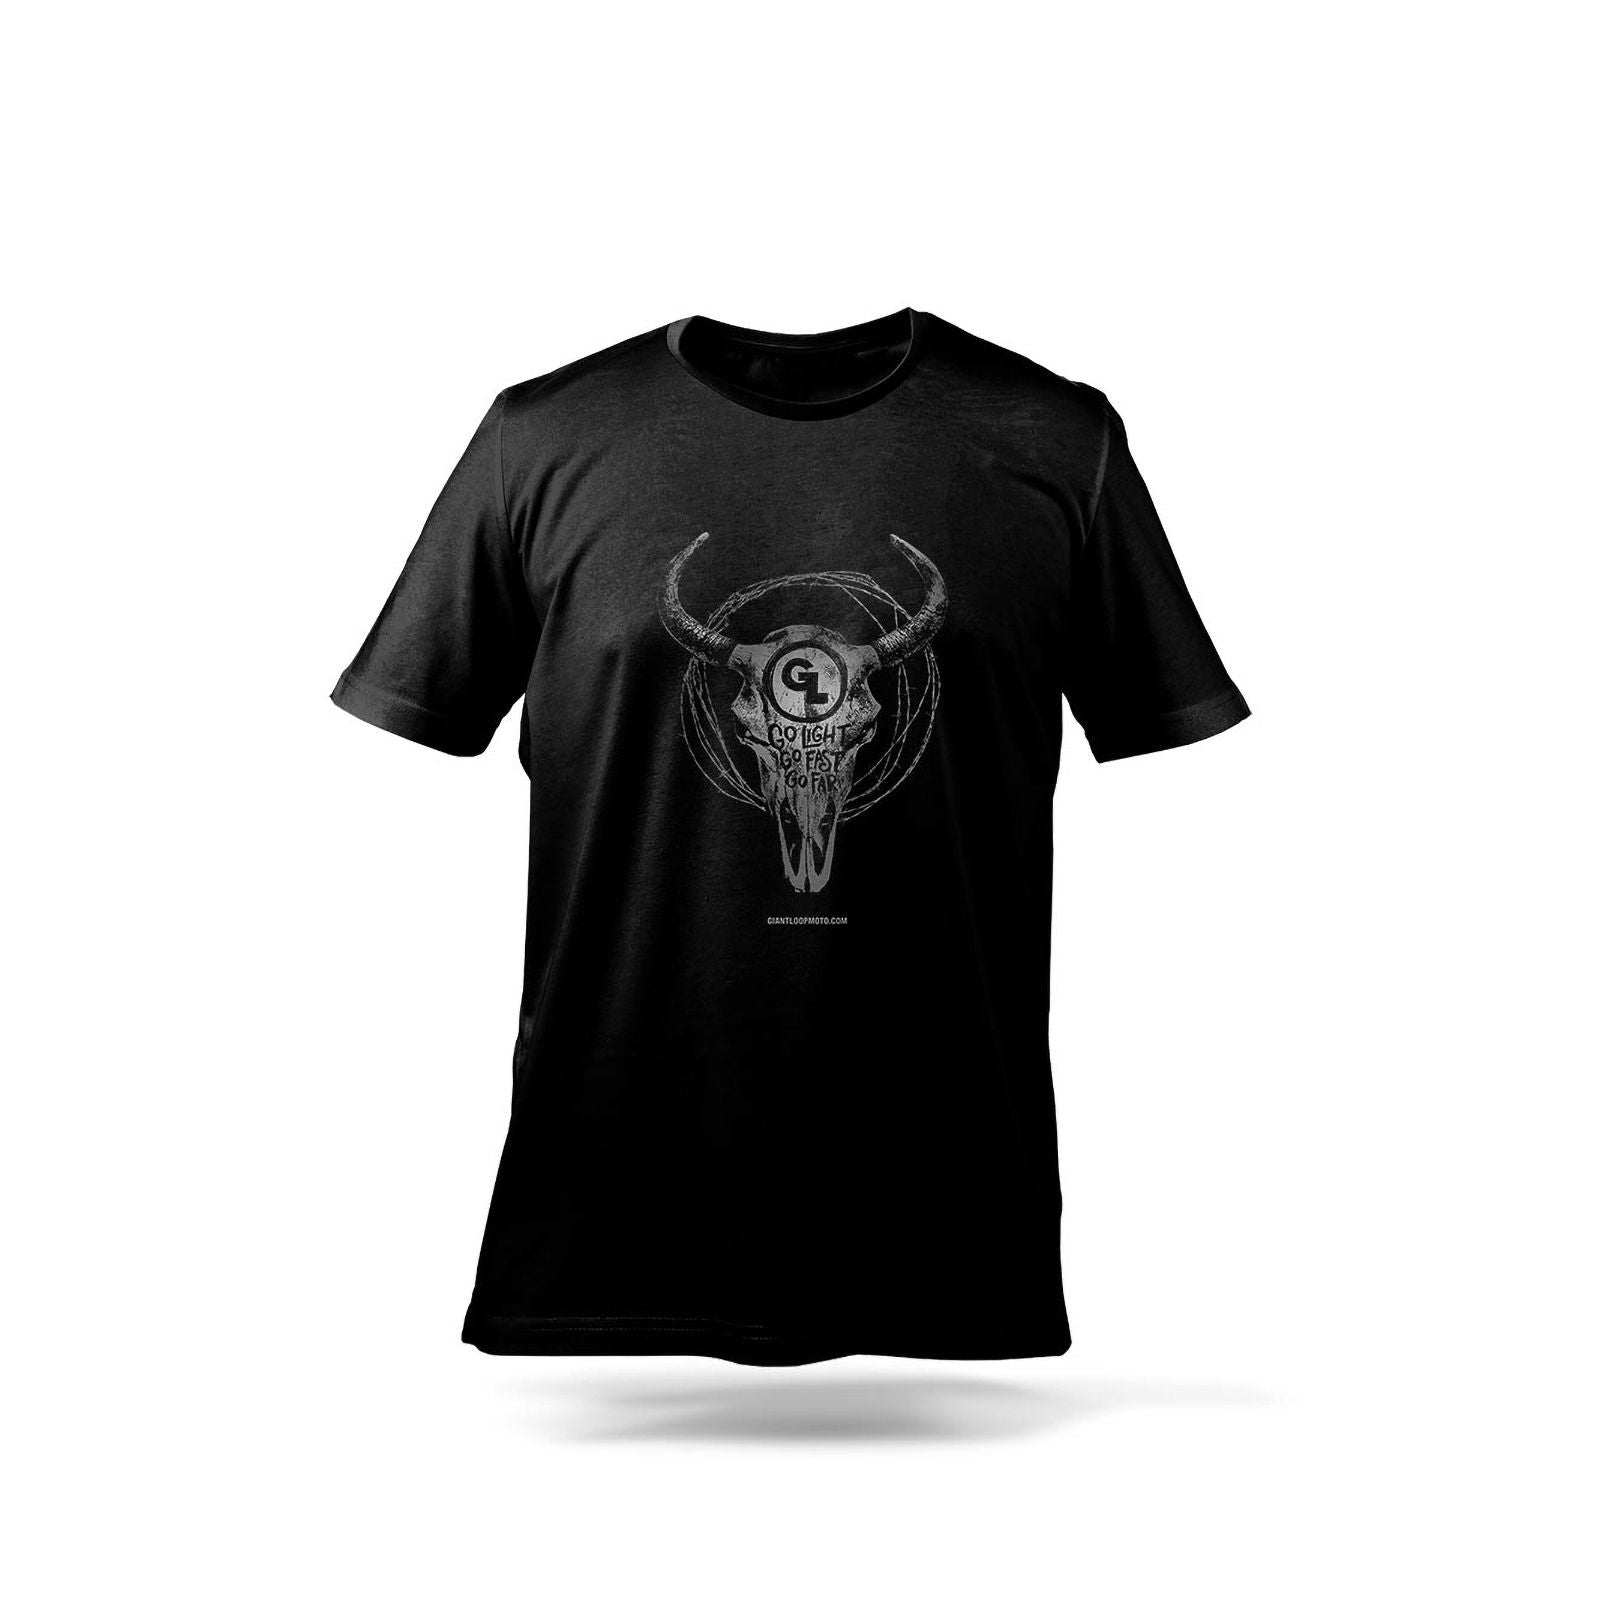 New GIANT LOOP Short Sleeve T-Shirt - Black Medium #GLTSBSBWM